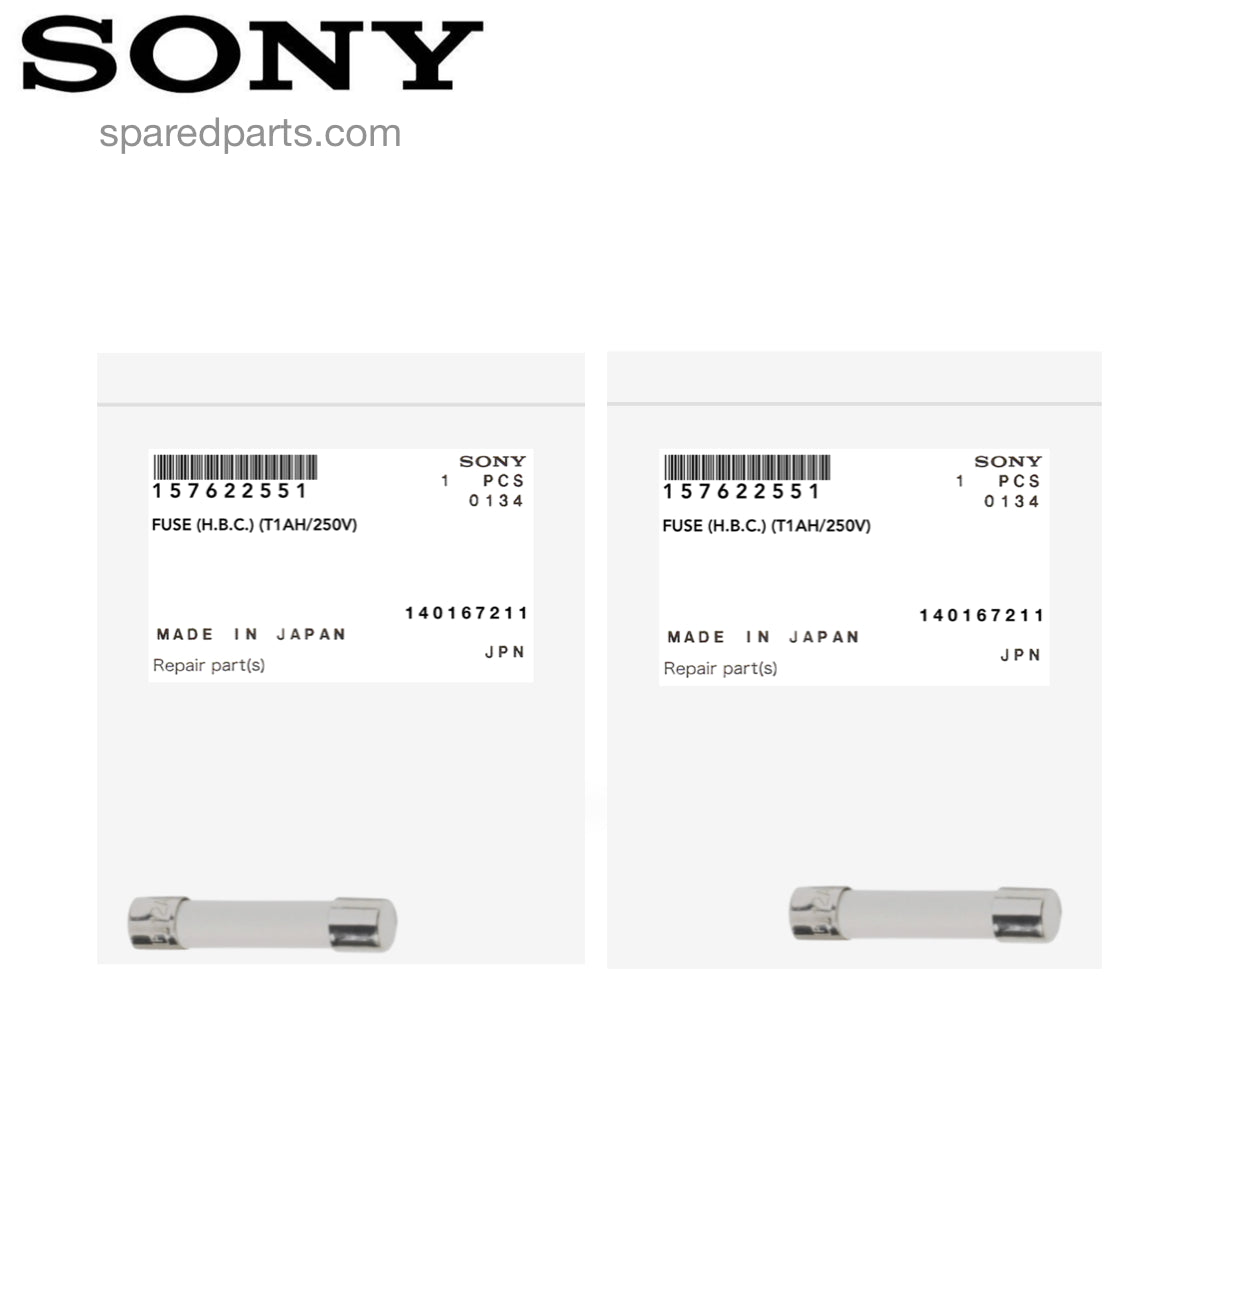 Sony FUSE (H.B.C.) (T1AH/250V) 157622551